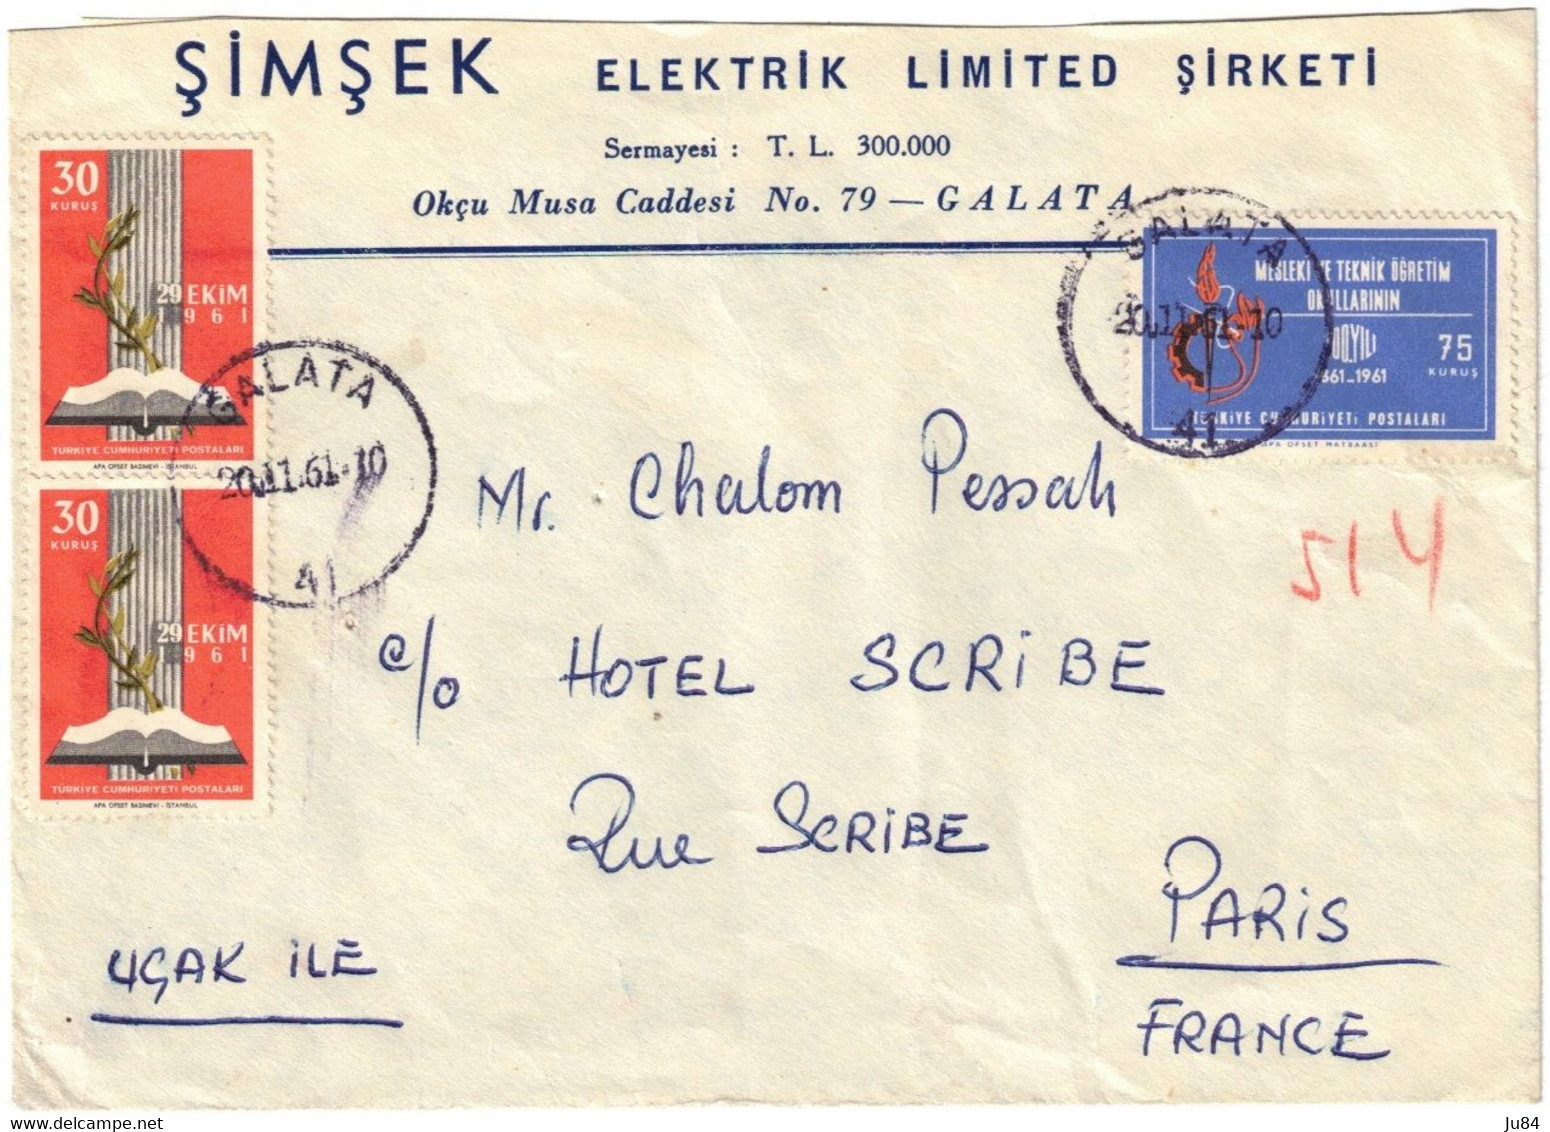 Turquie - Galata - Simsek Elektrik Limited Sirketi - Lettre Pour Hôtel Scribe Paris (France) - 20 Novembre 1961 - Briefe U. Dokumente